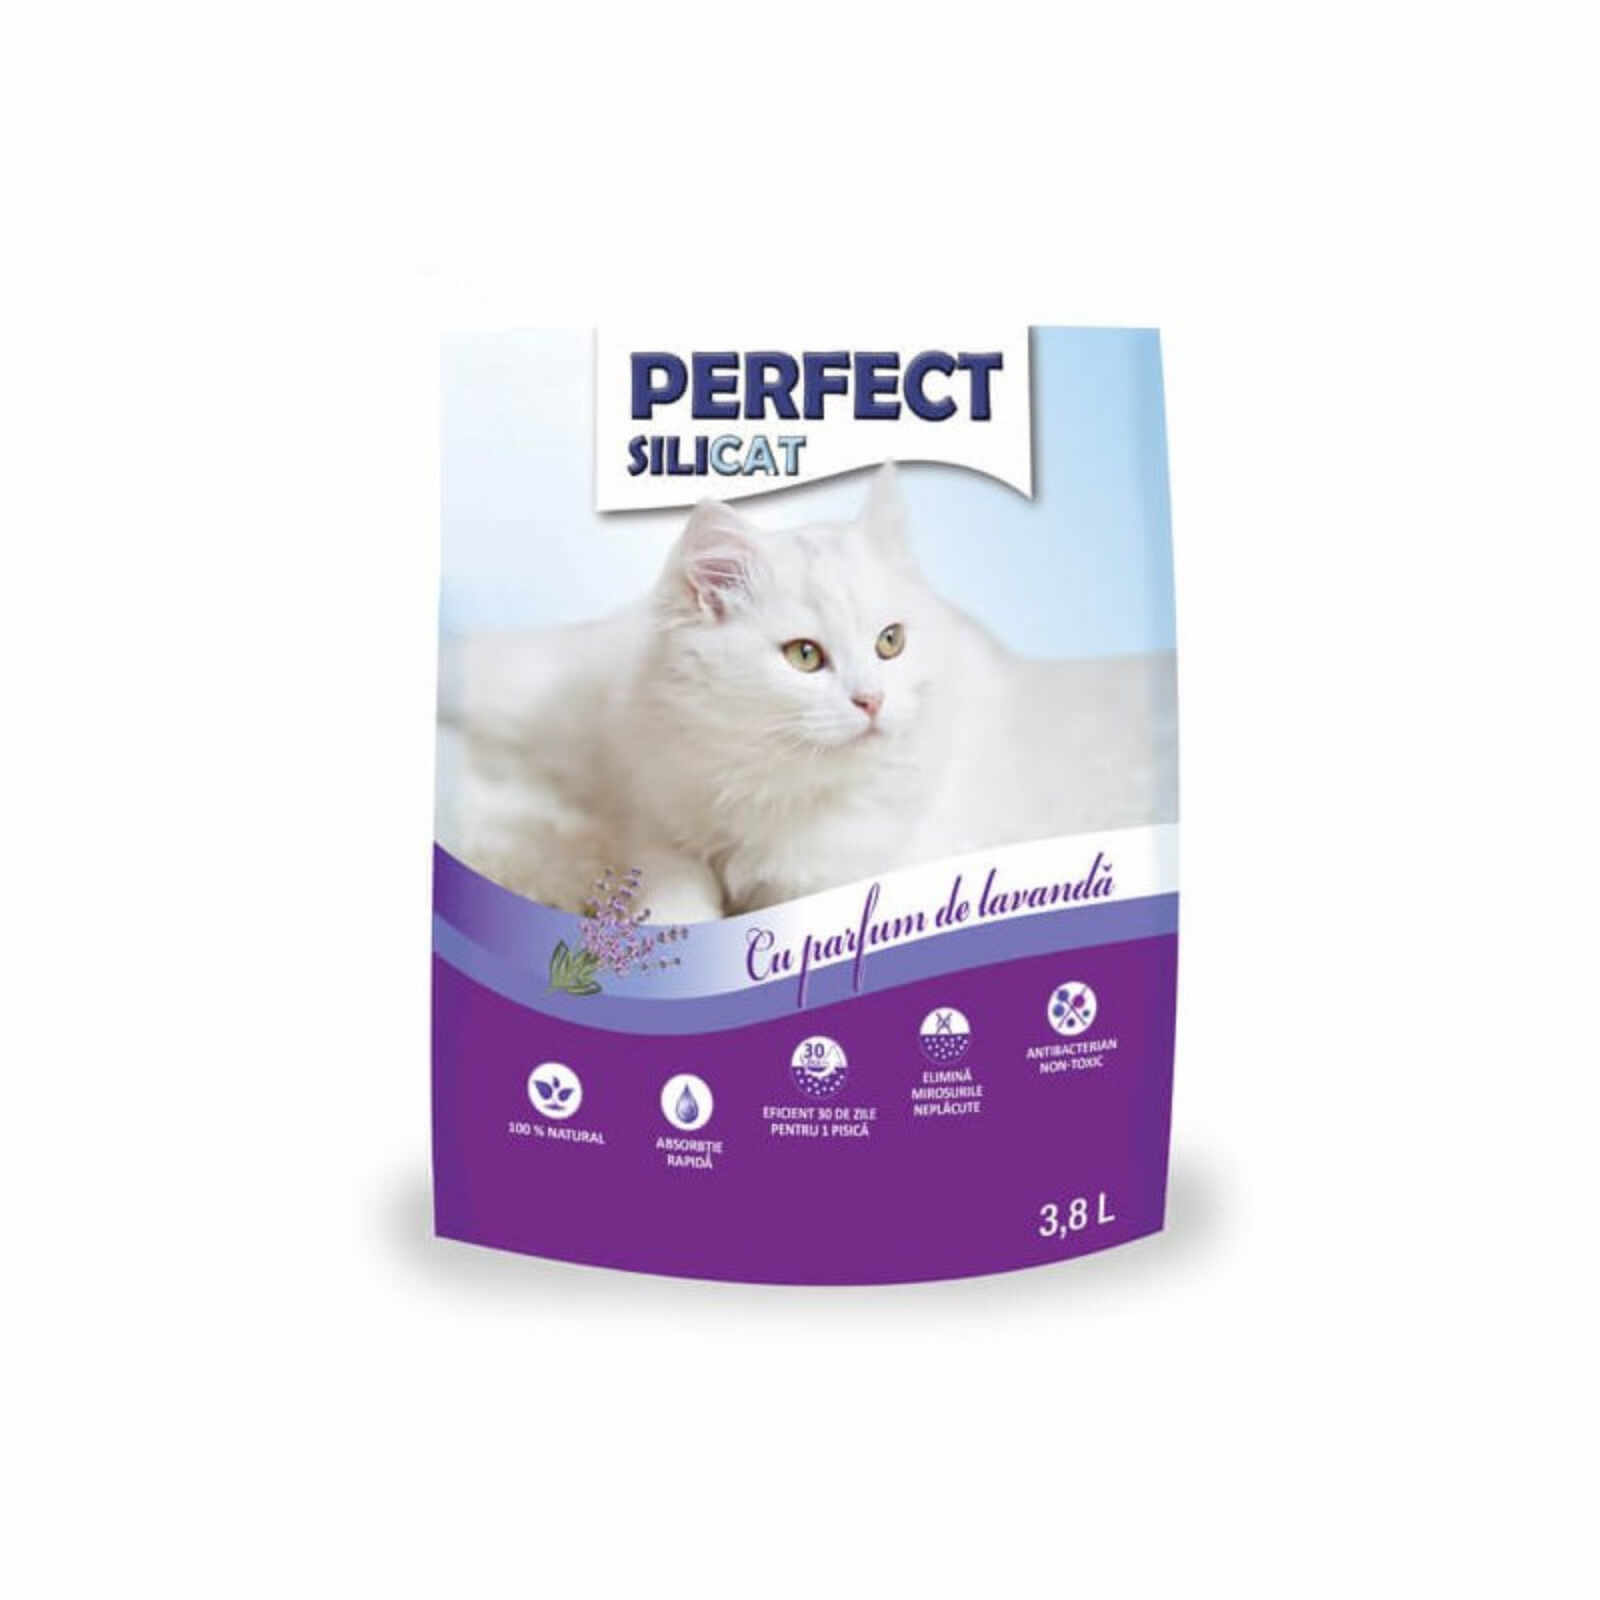 Nisip Silicat pentru pisici Perfect cu lavanda, 3.8 l